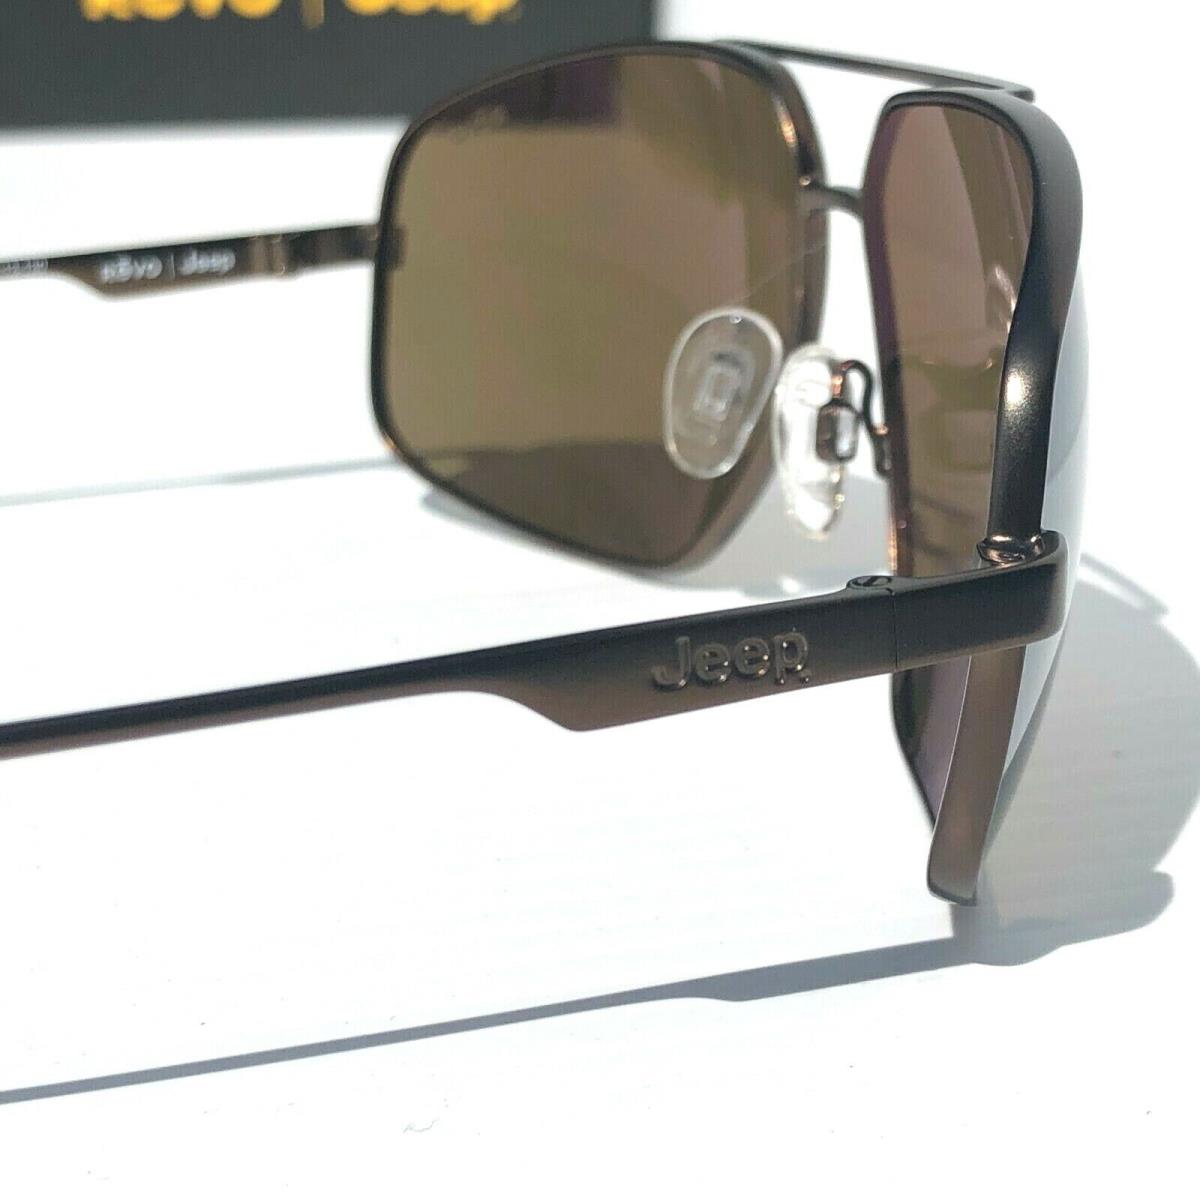 Revo sunglasses Jeep Metro - Brown Frame, Brown Lens, Brown Manufacturer